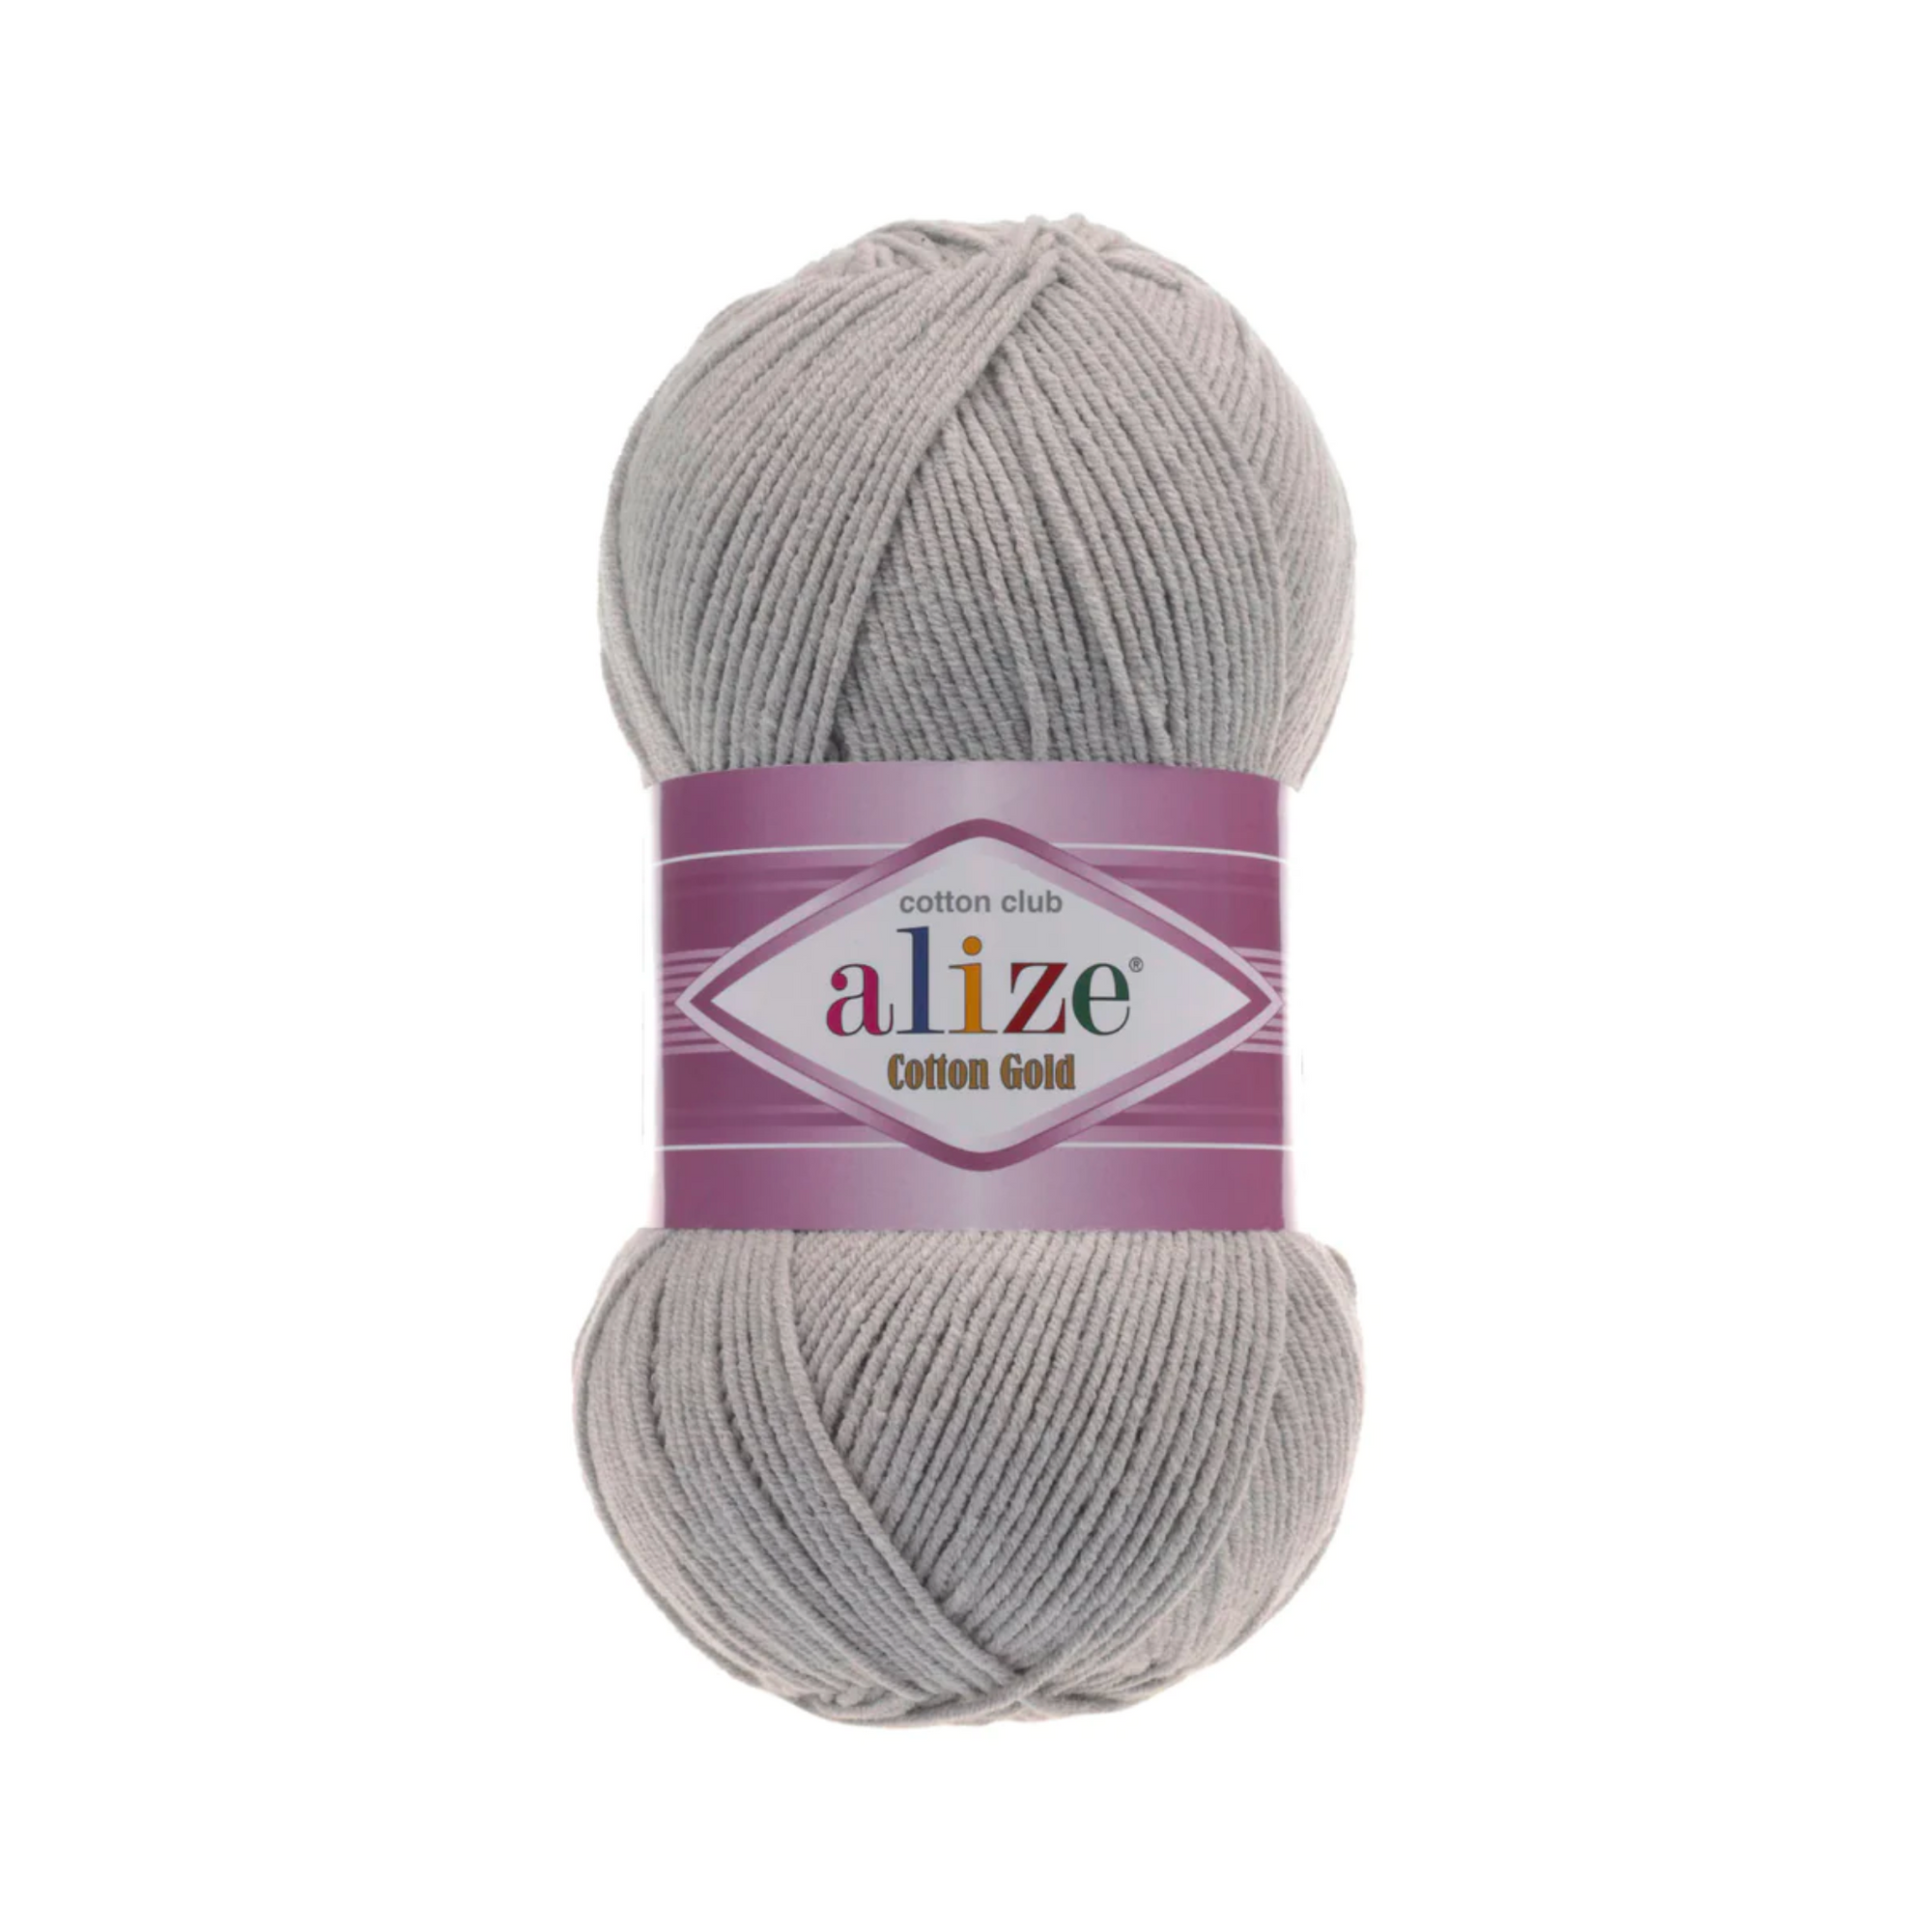 Alize Cotton Gold Knitting Yarn, Khaki Green - 29